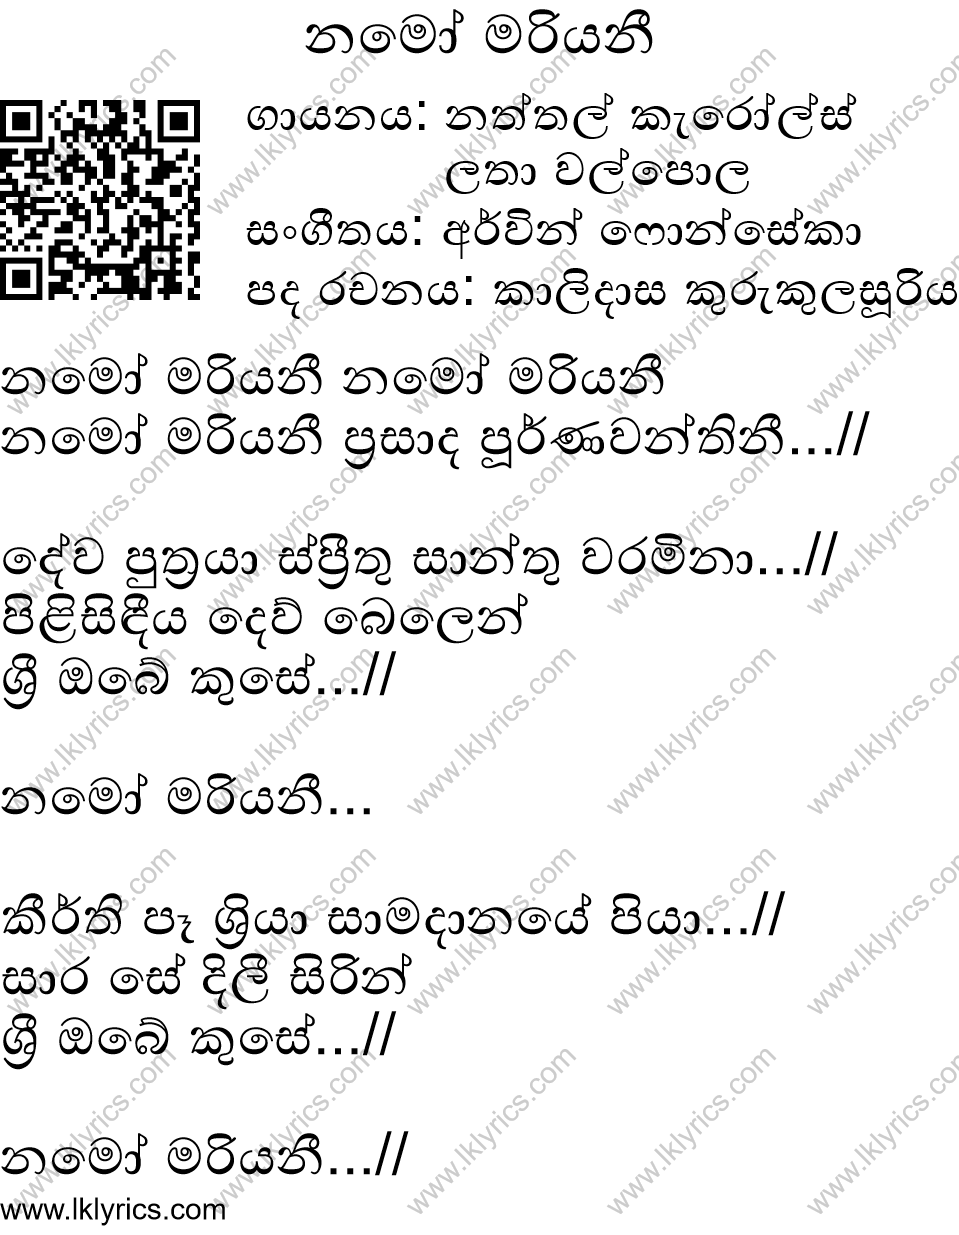 Sinhala Geethika Mp3 Song Download - sermegans.blogspot.com